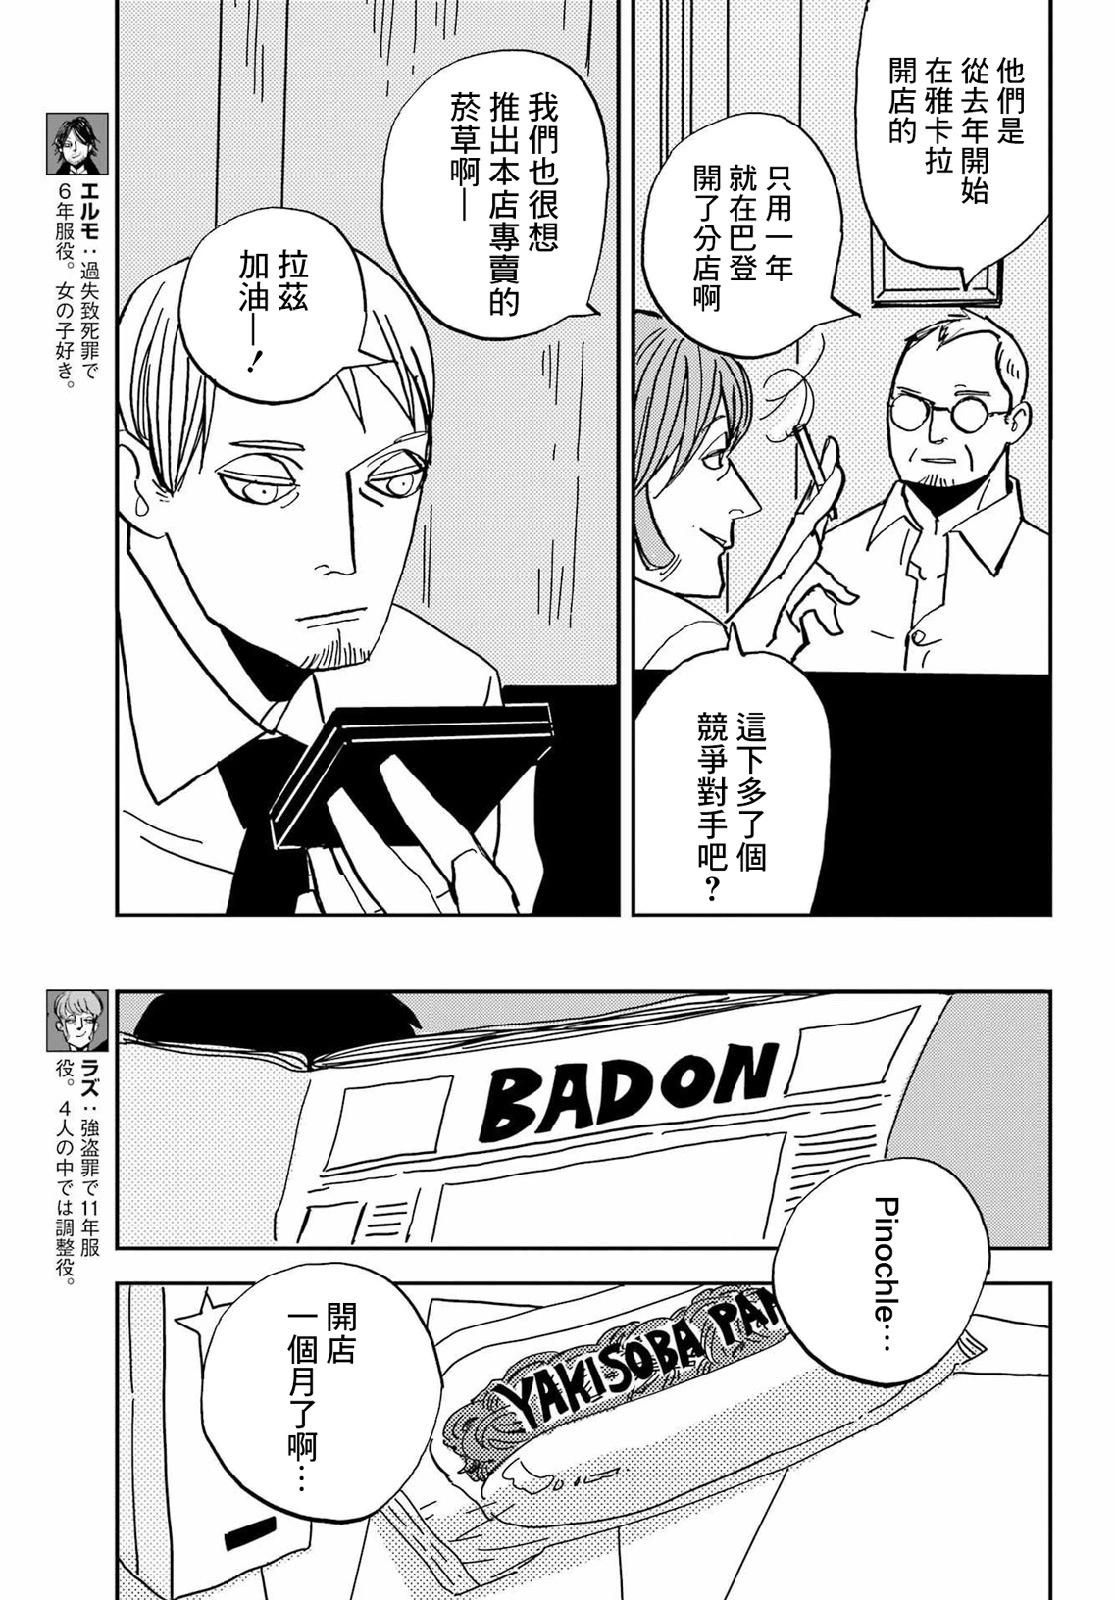 BADON - 第44話 - 5